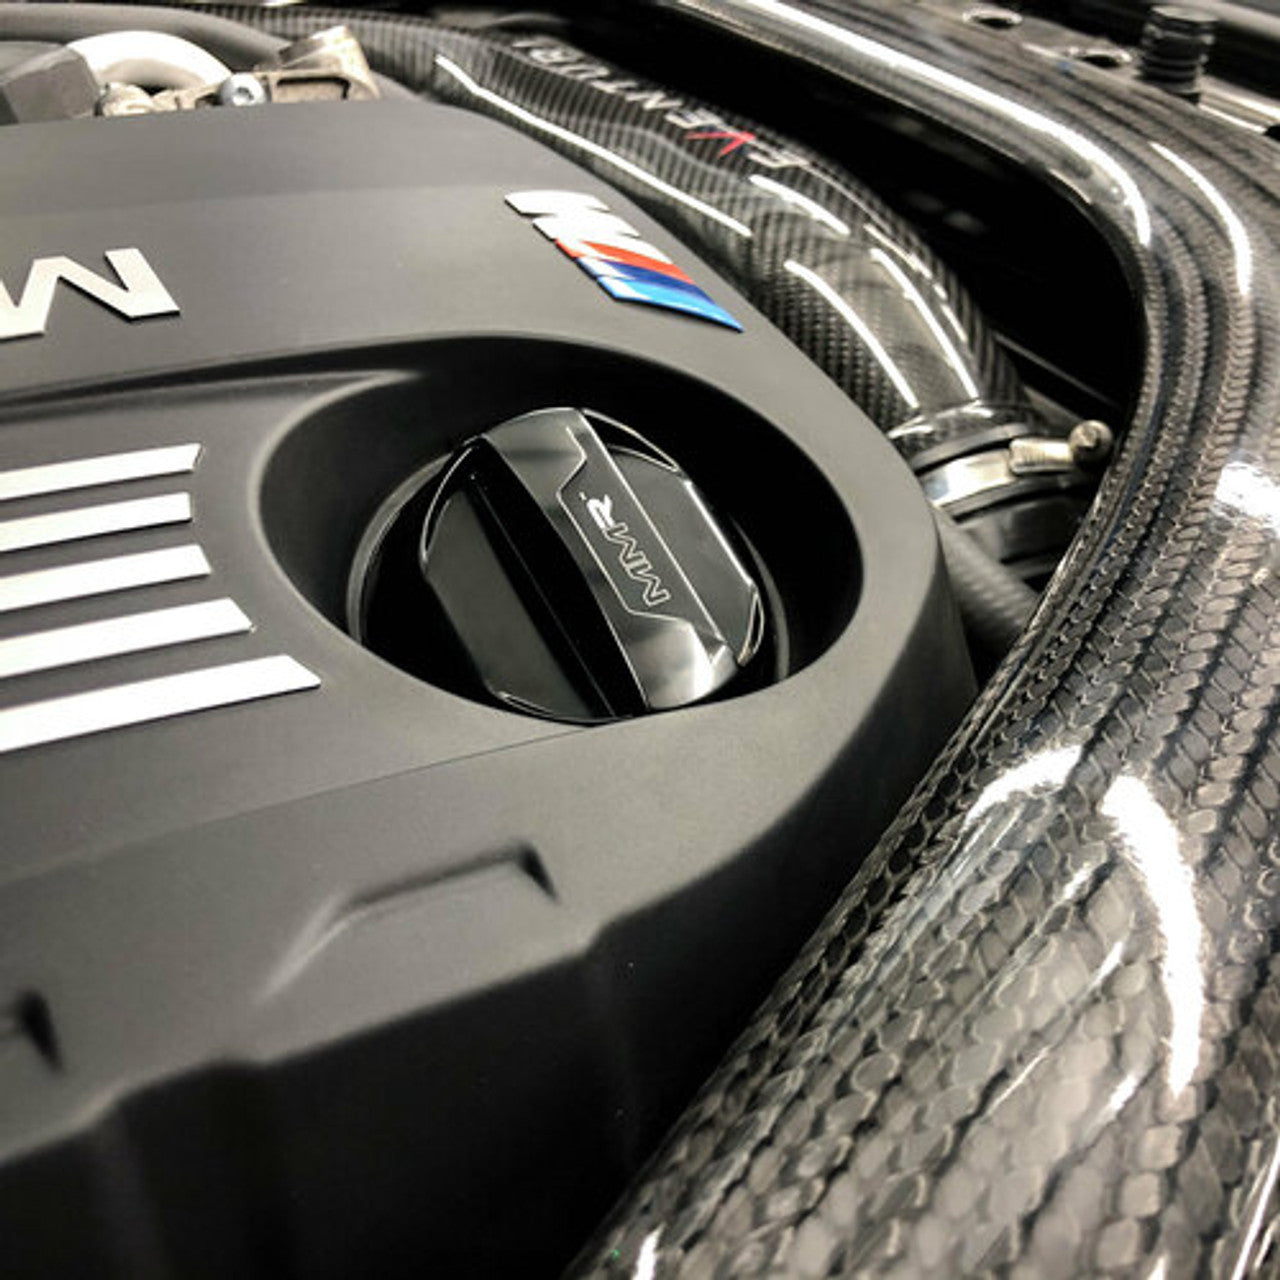 MMR BMW ignite performance